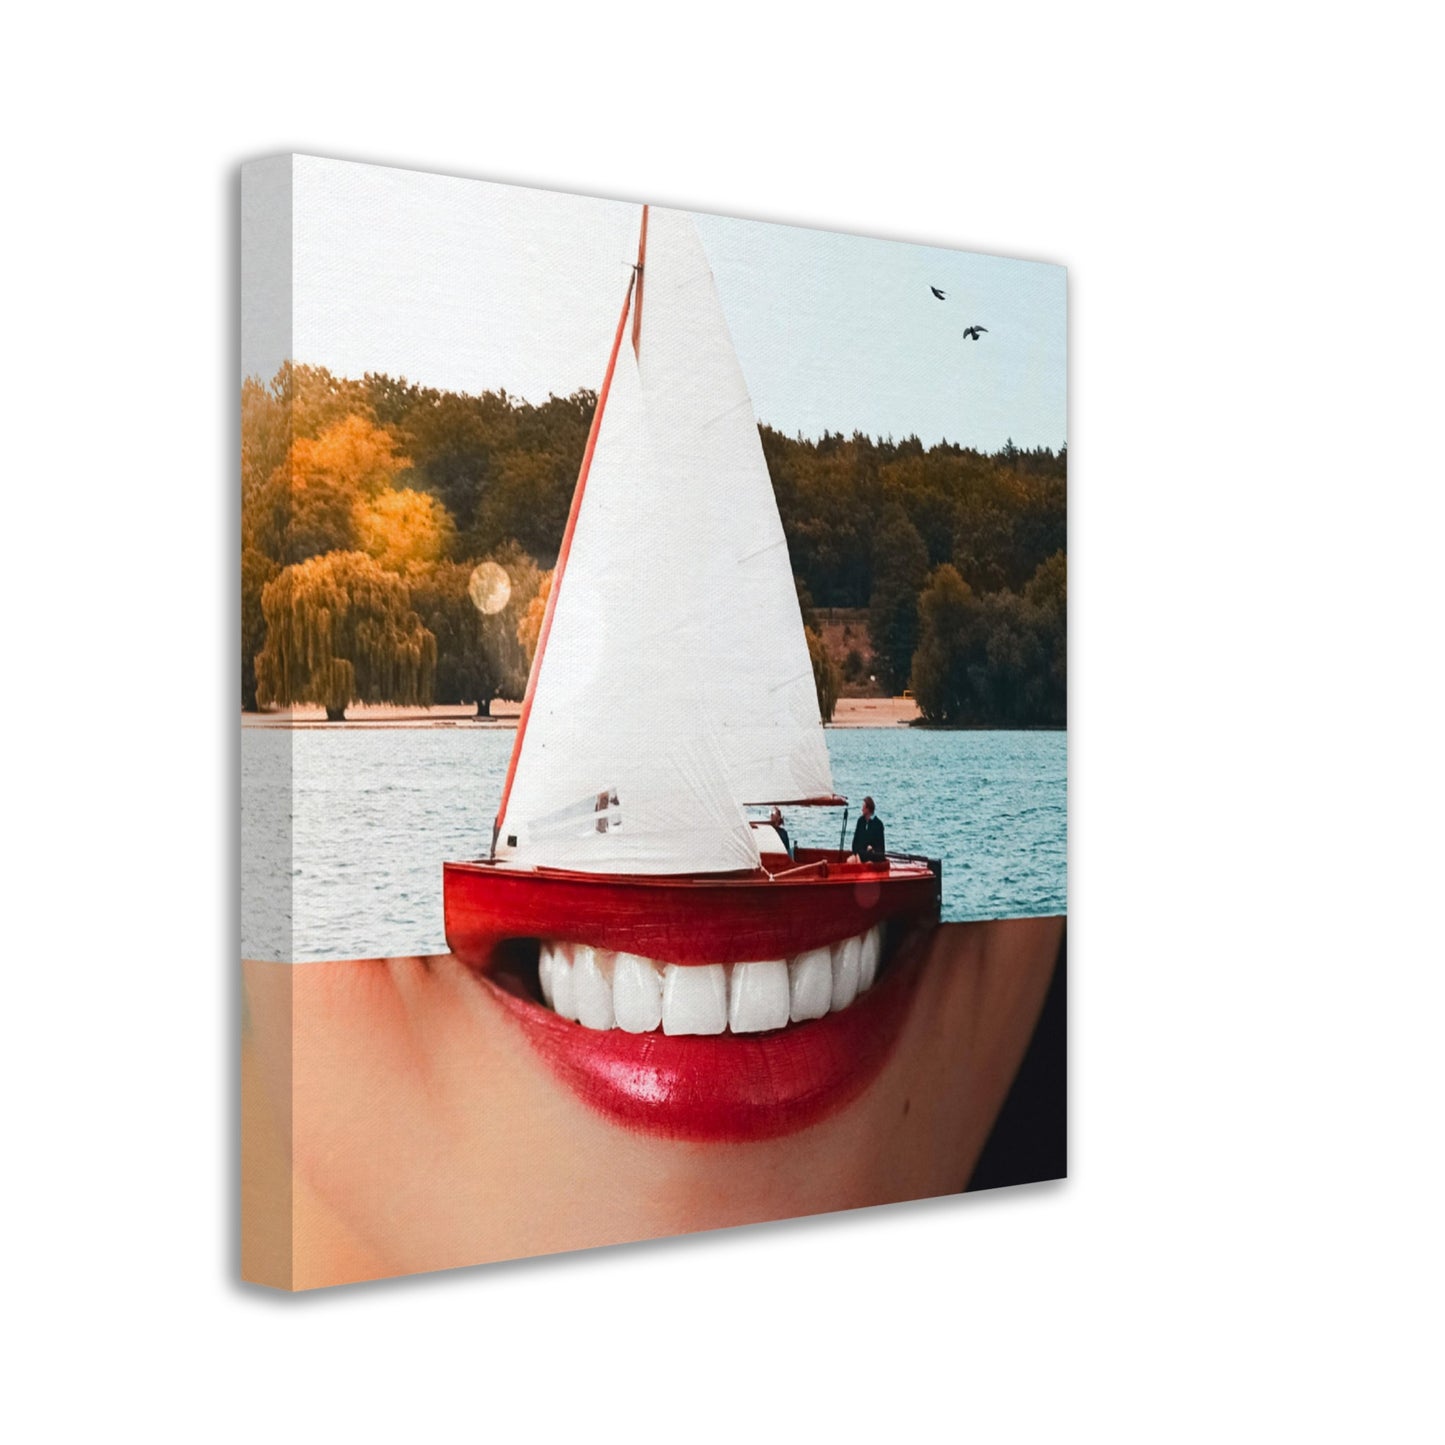 Boatiful Smile - Canvas Print